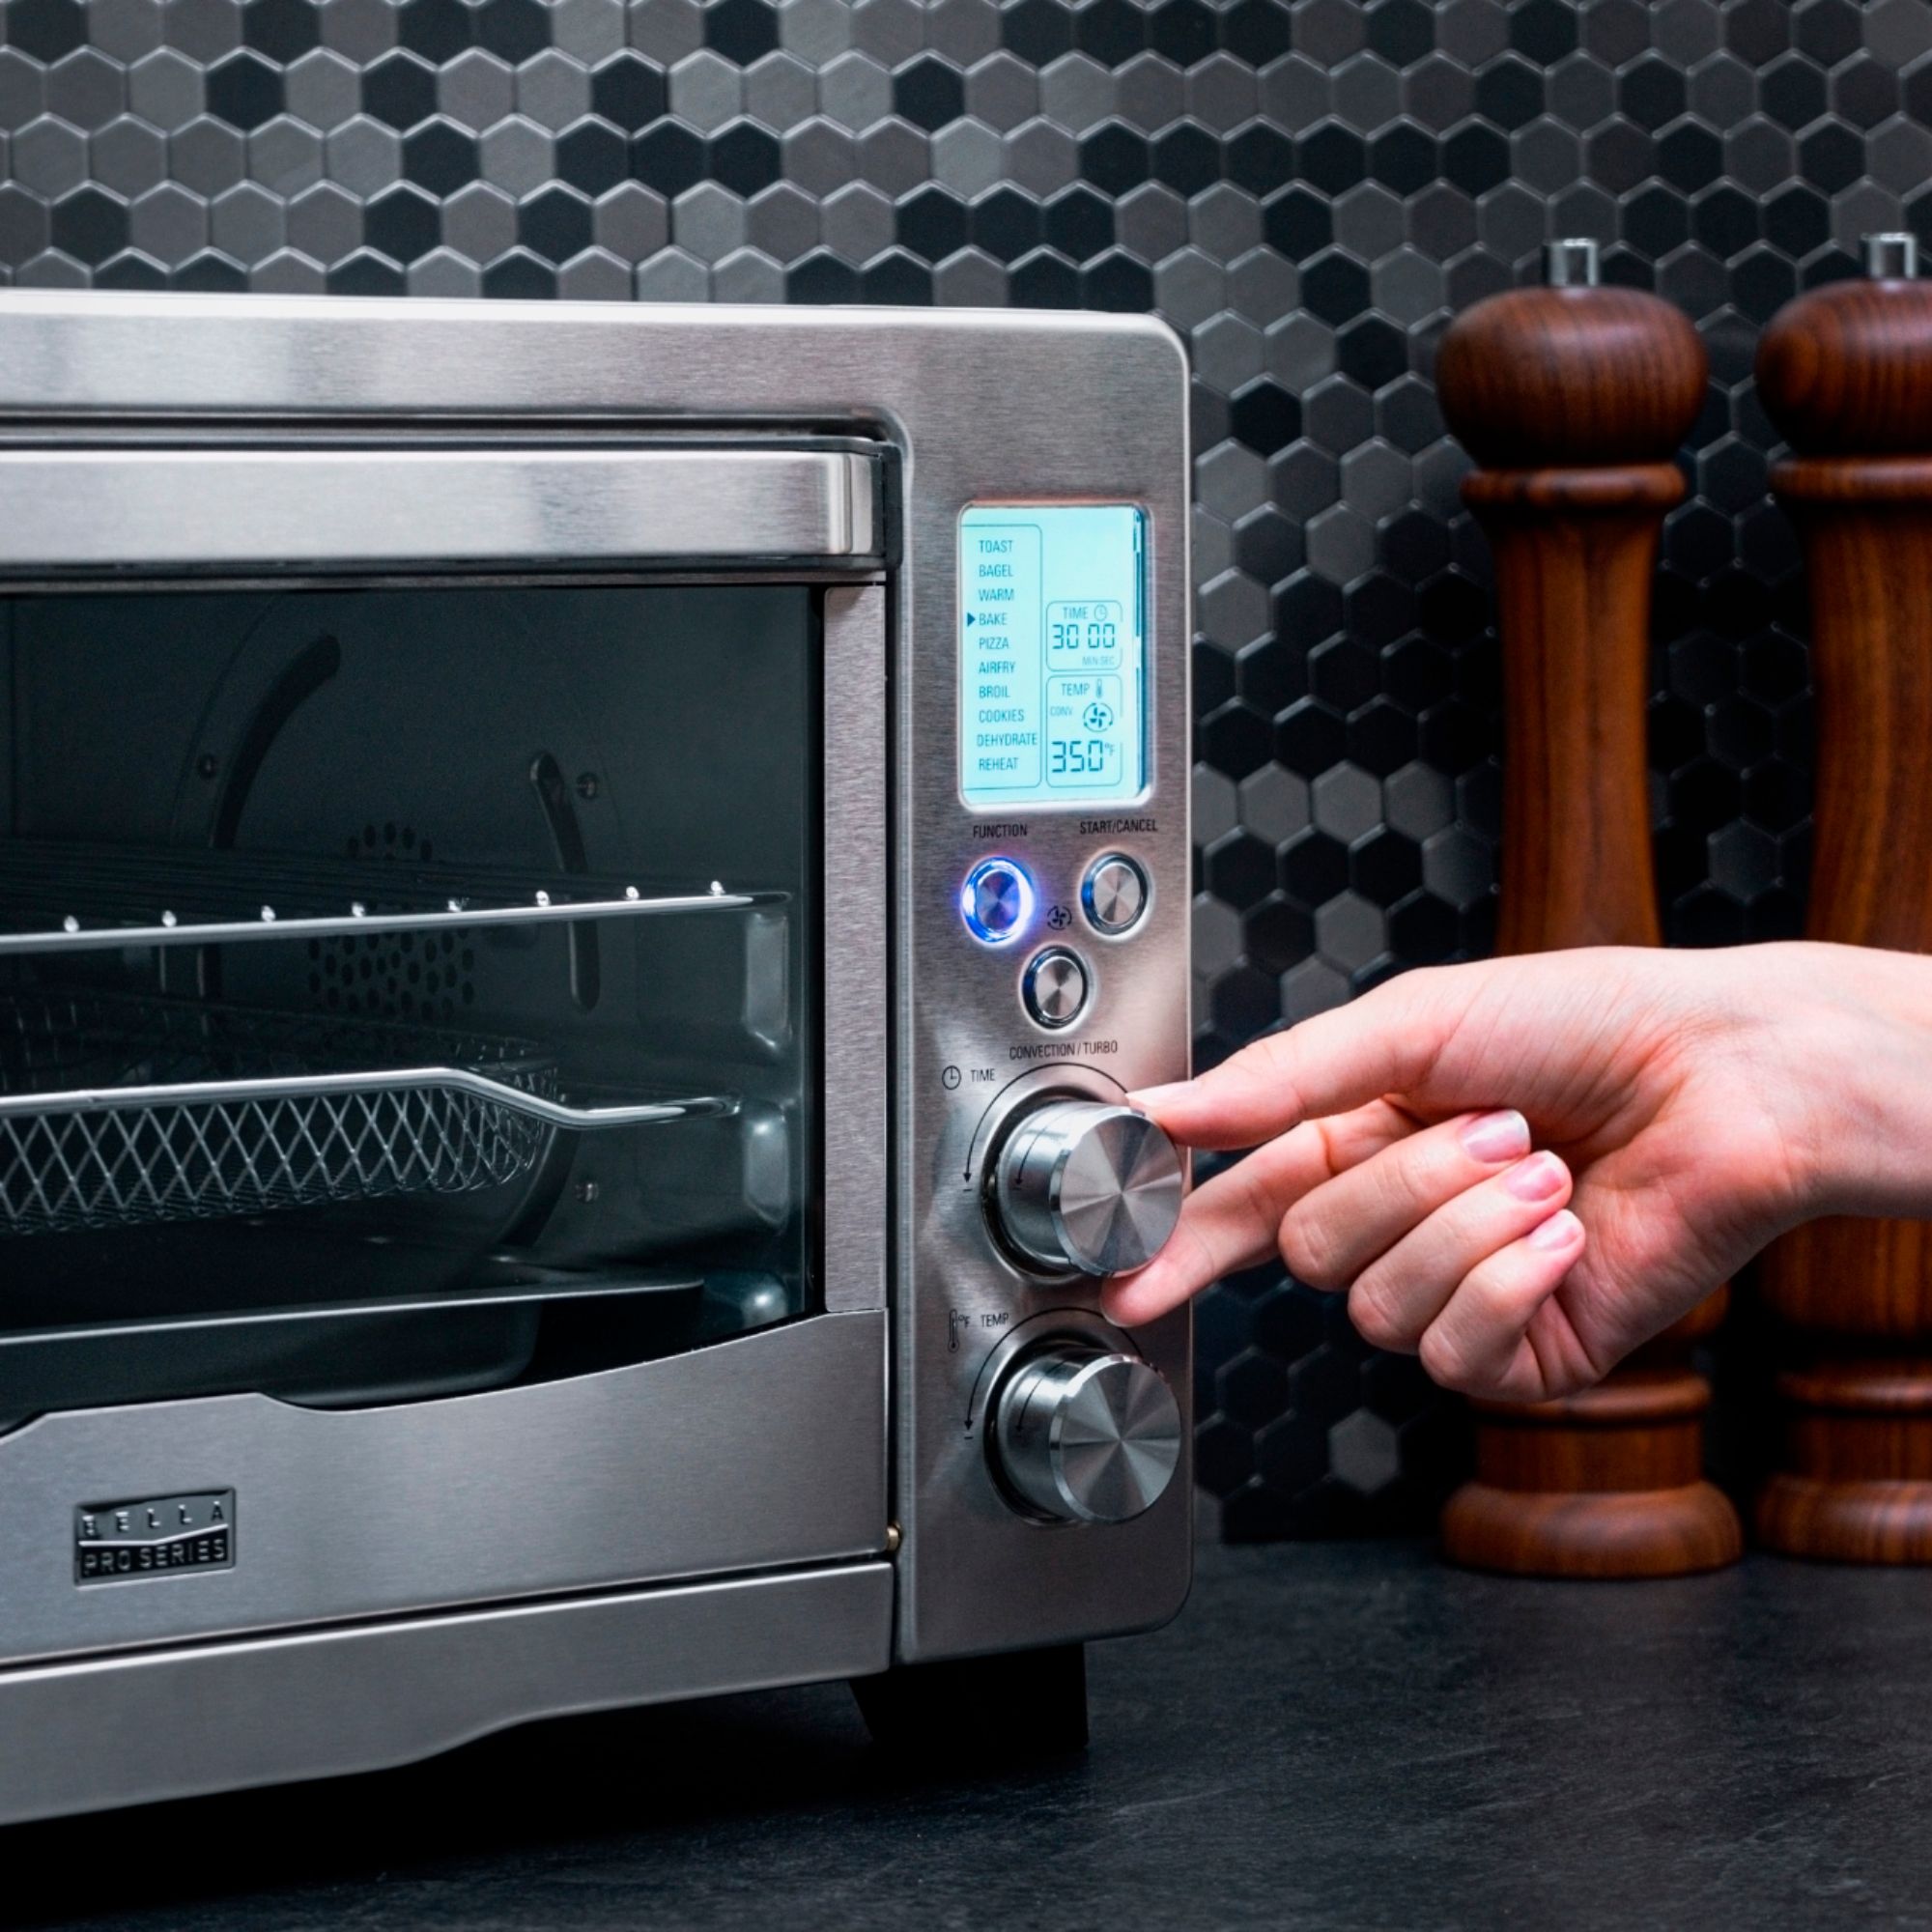 Best Buy: Bella Pro Series 2-Slice Extra-Wide-Slot Toaster Copper 90098